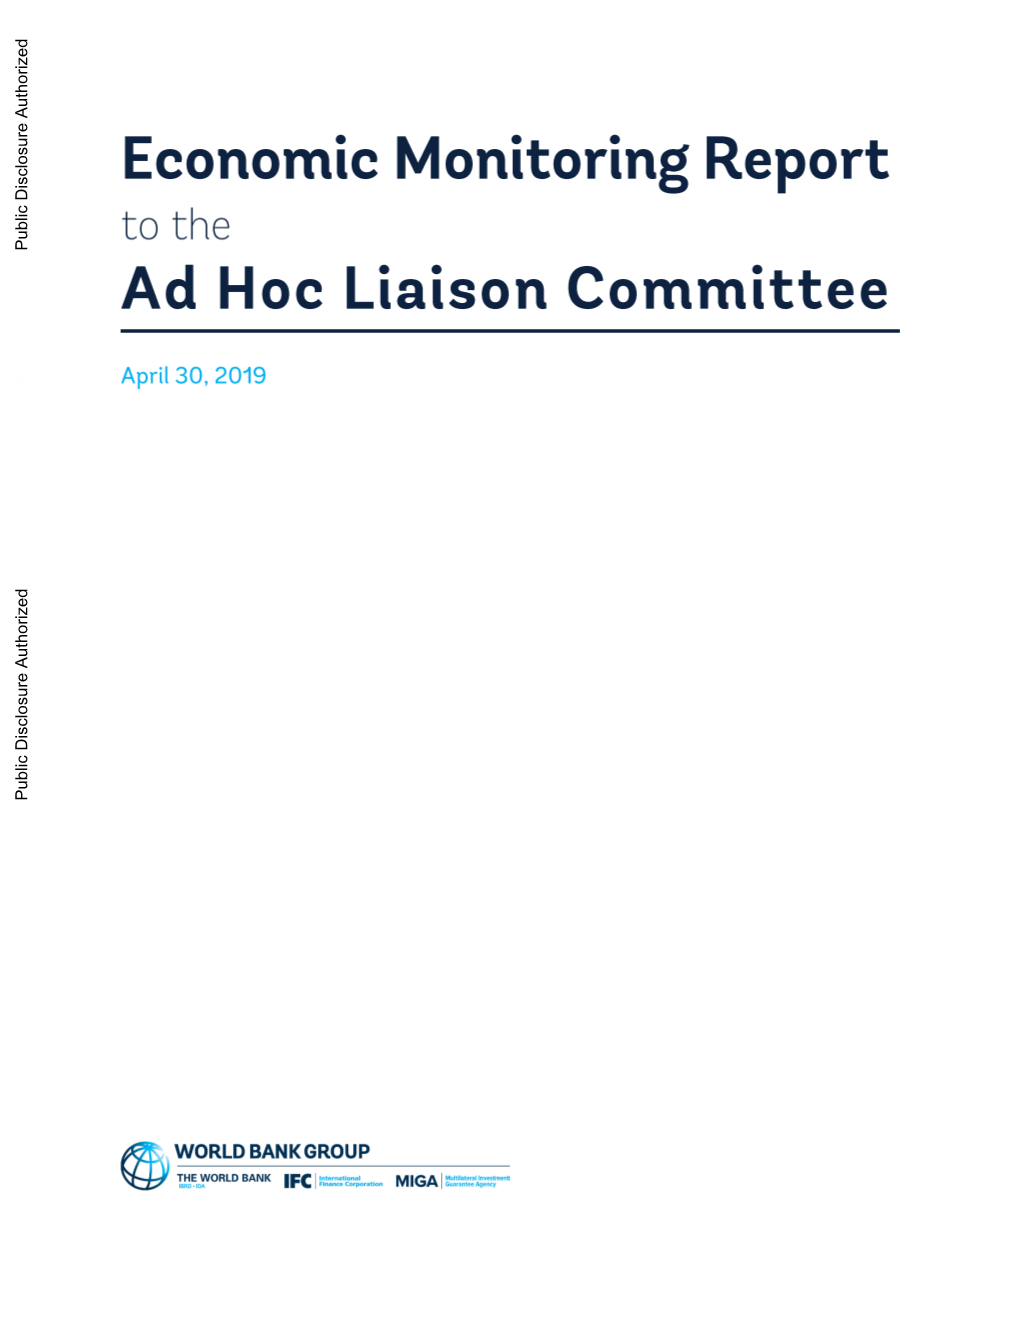 Economic Monitoring Report to the Ad Hoc